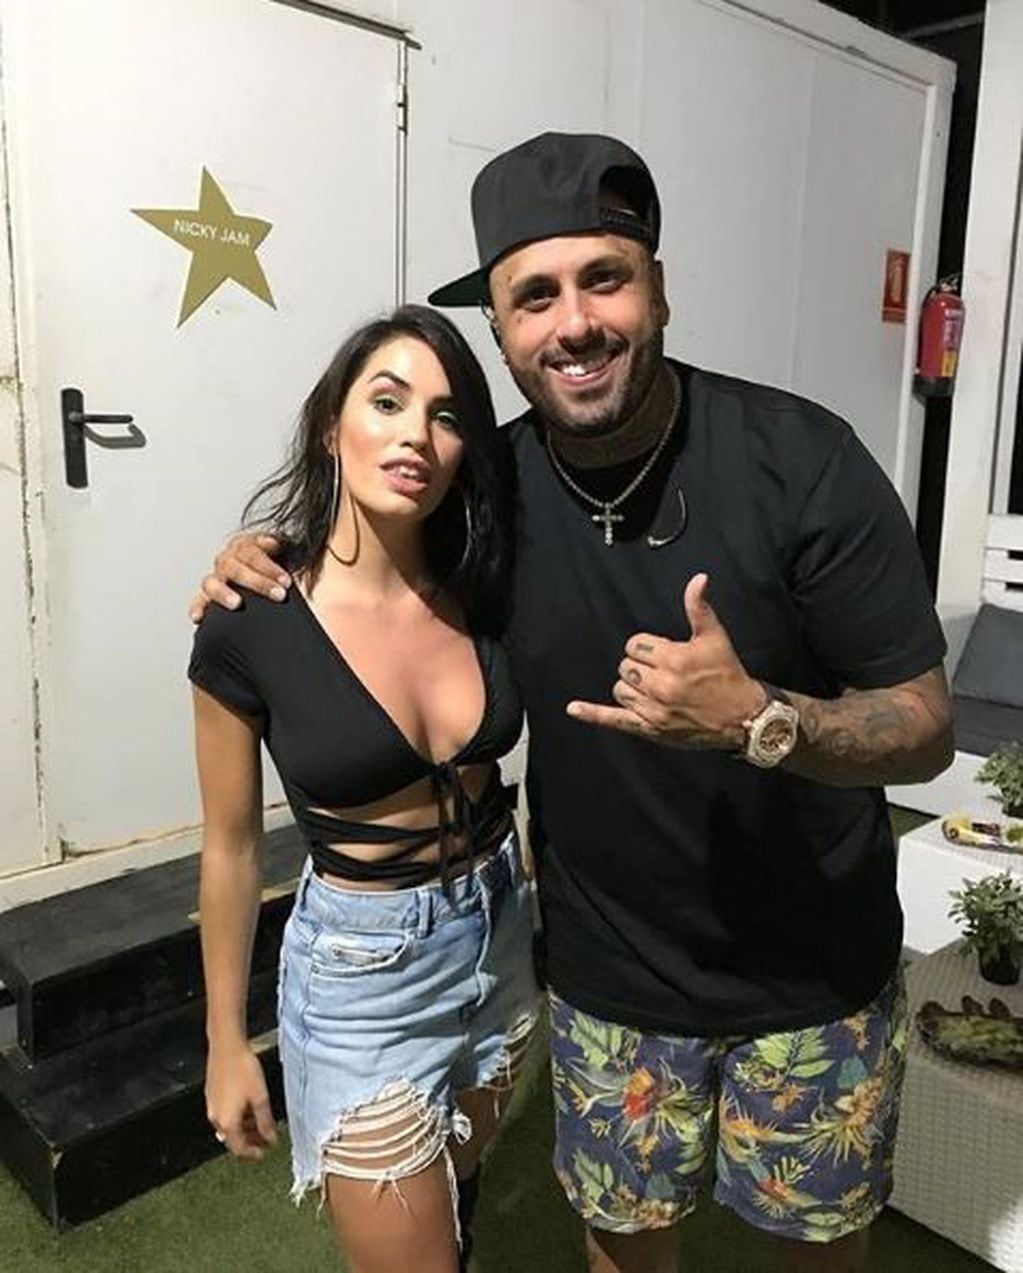 Lali junto a Nicky Jam en el festival Starlite (Instagram)